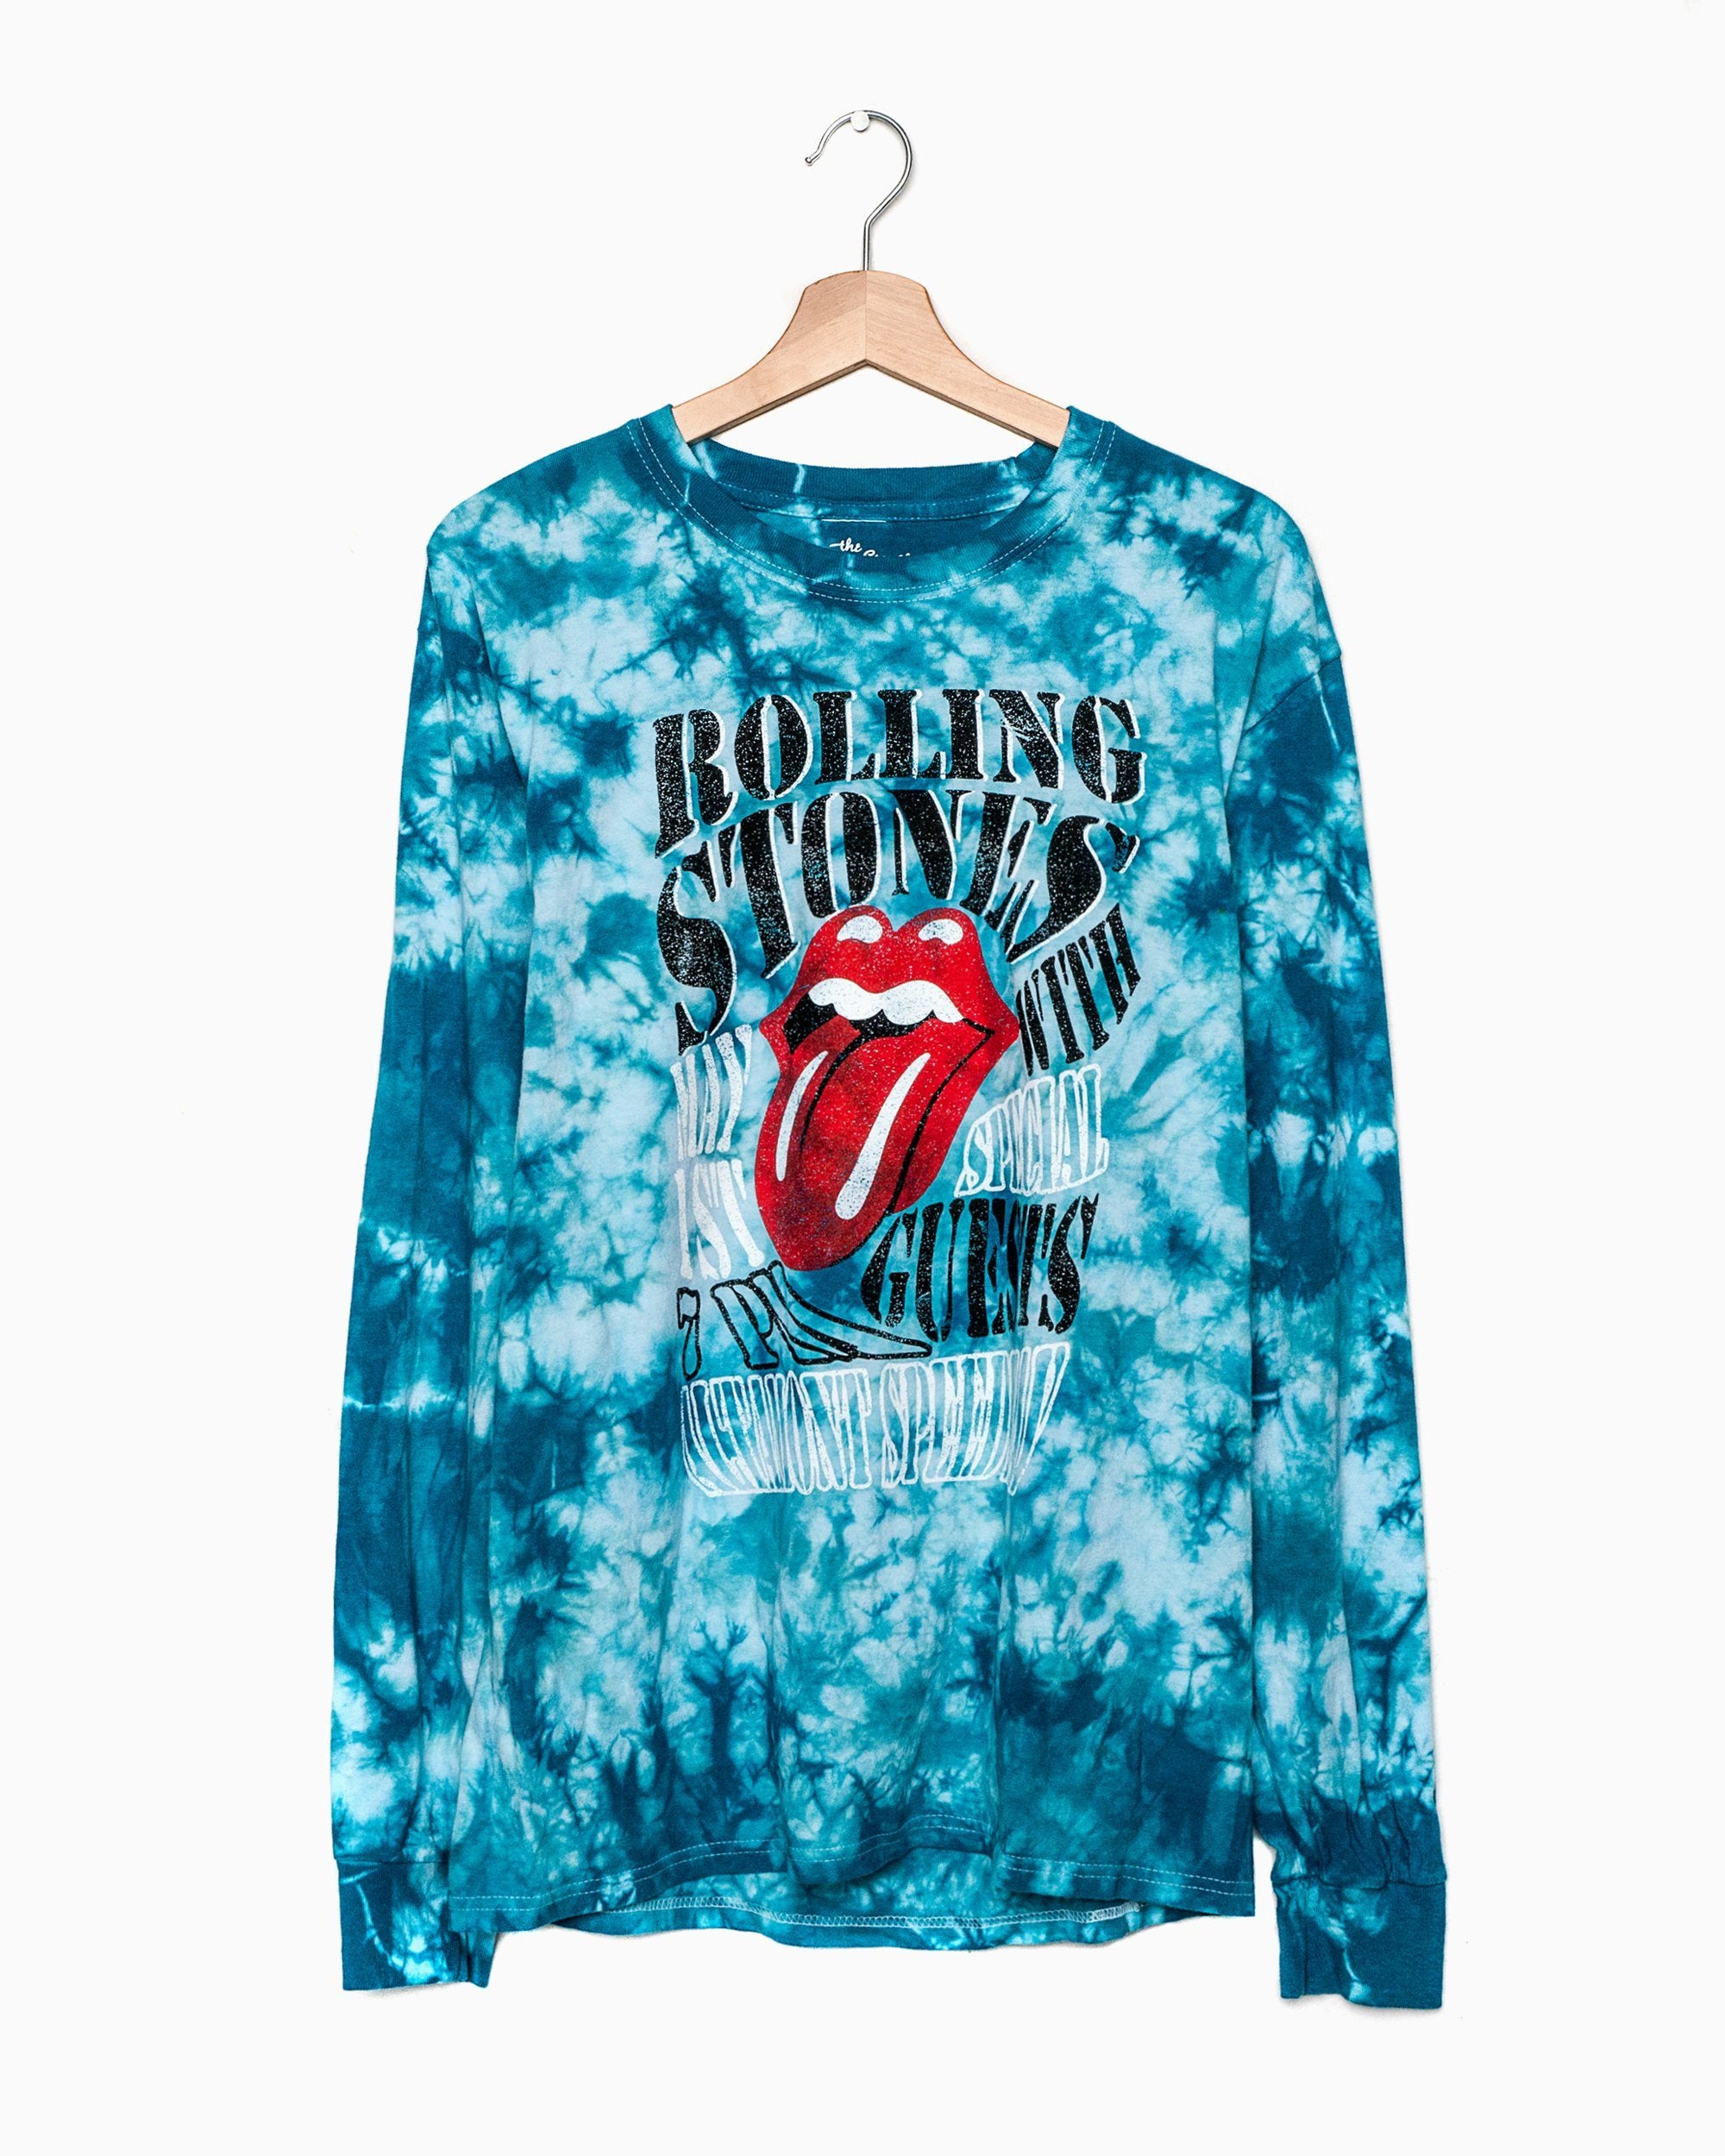 Rolling Stones Altamont Speedway Teal Cloud Tie Dye Long Sleeve Tee (FINAL SALE) - shoplivylu